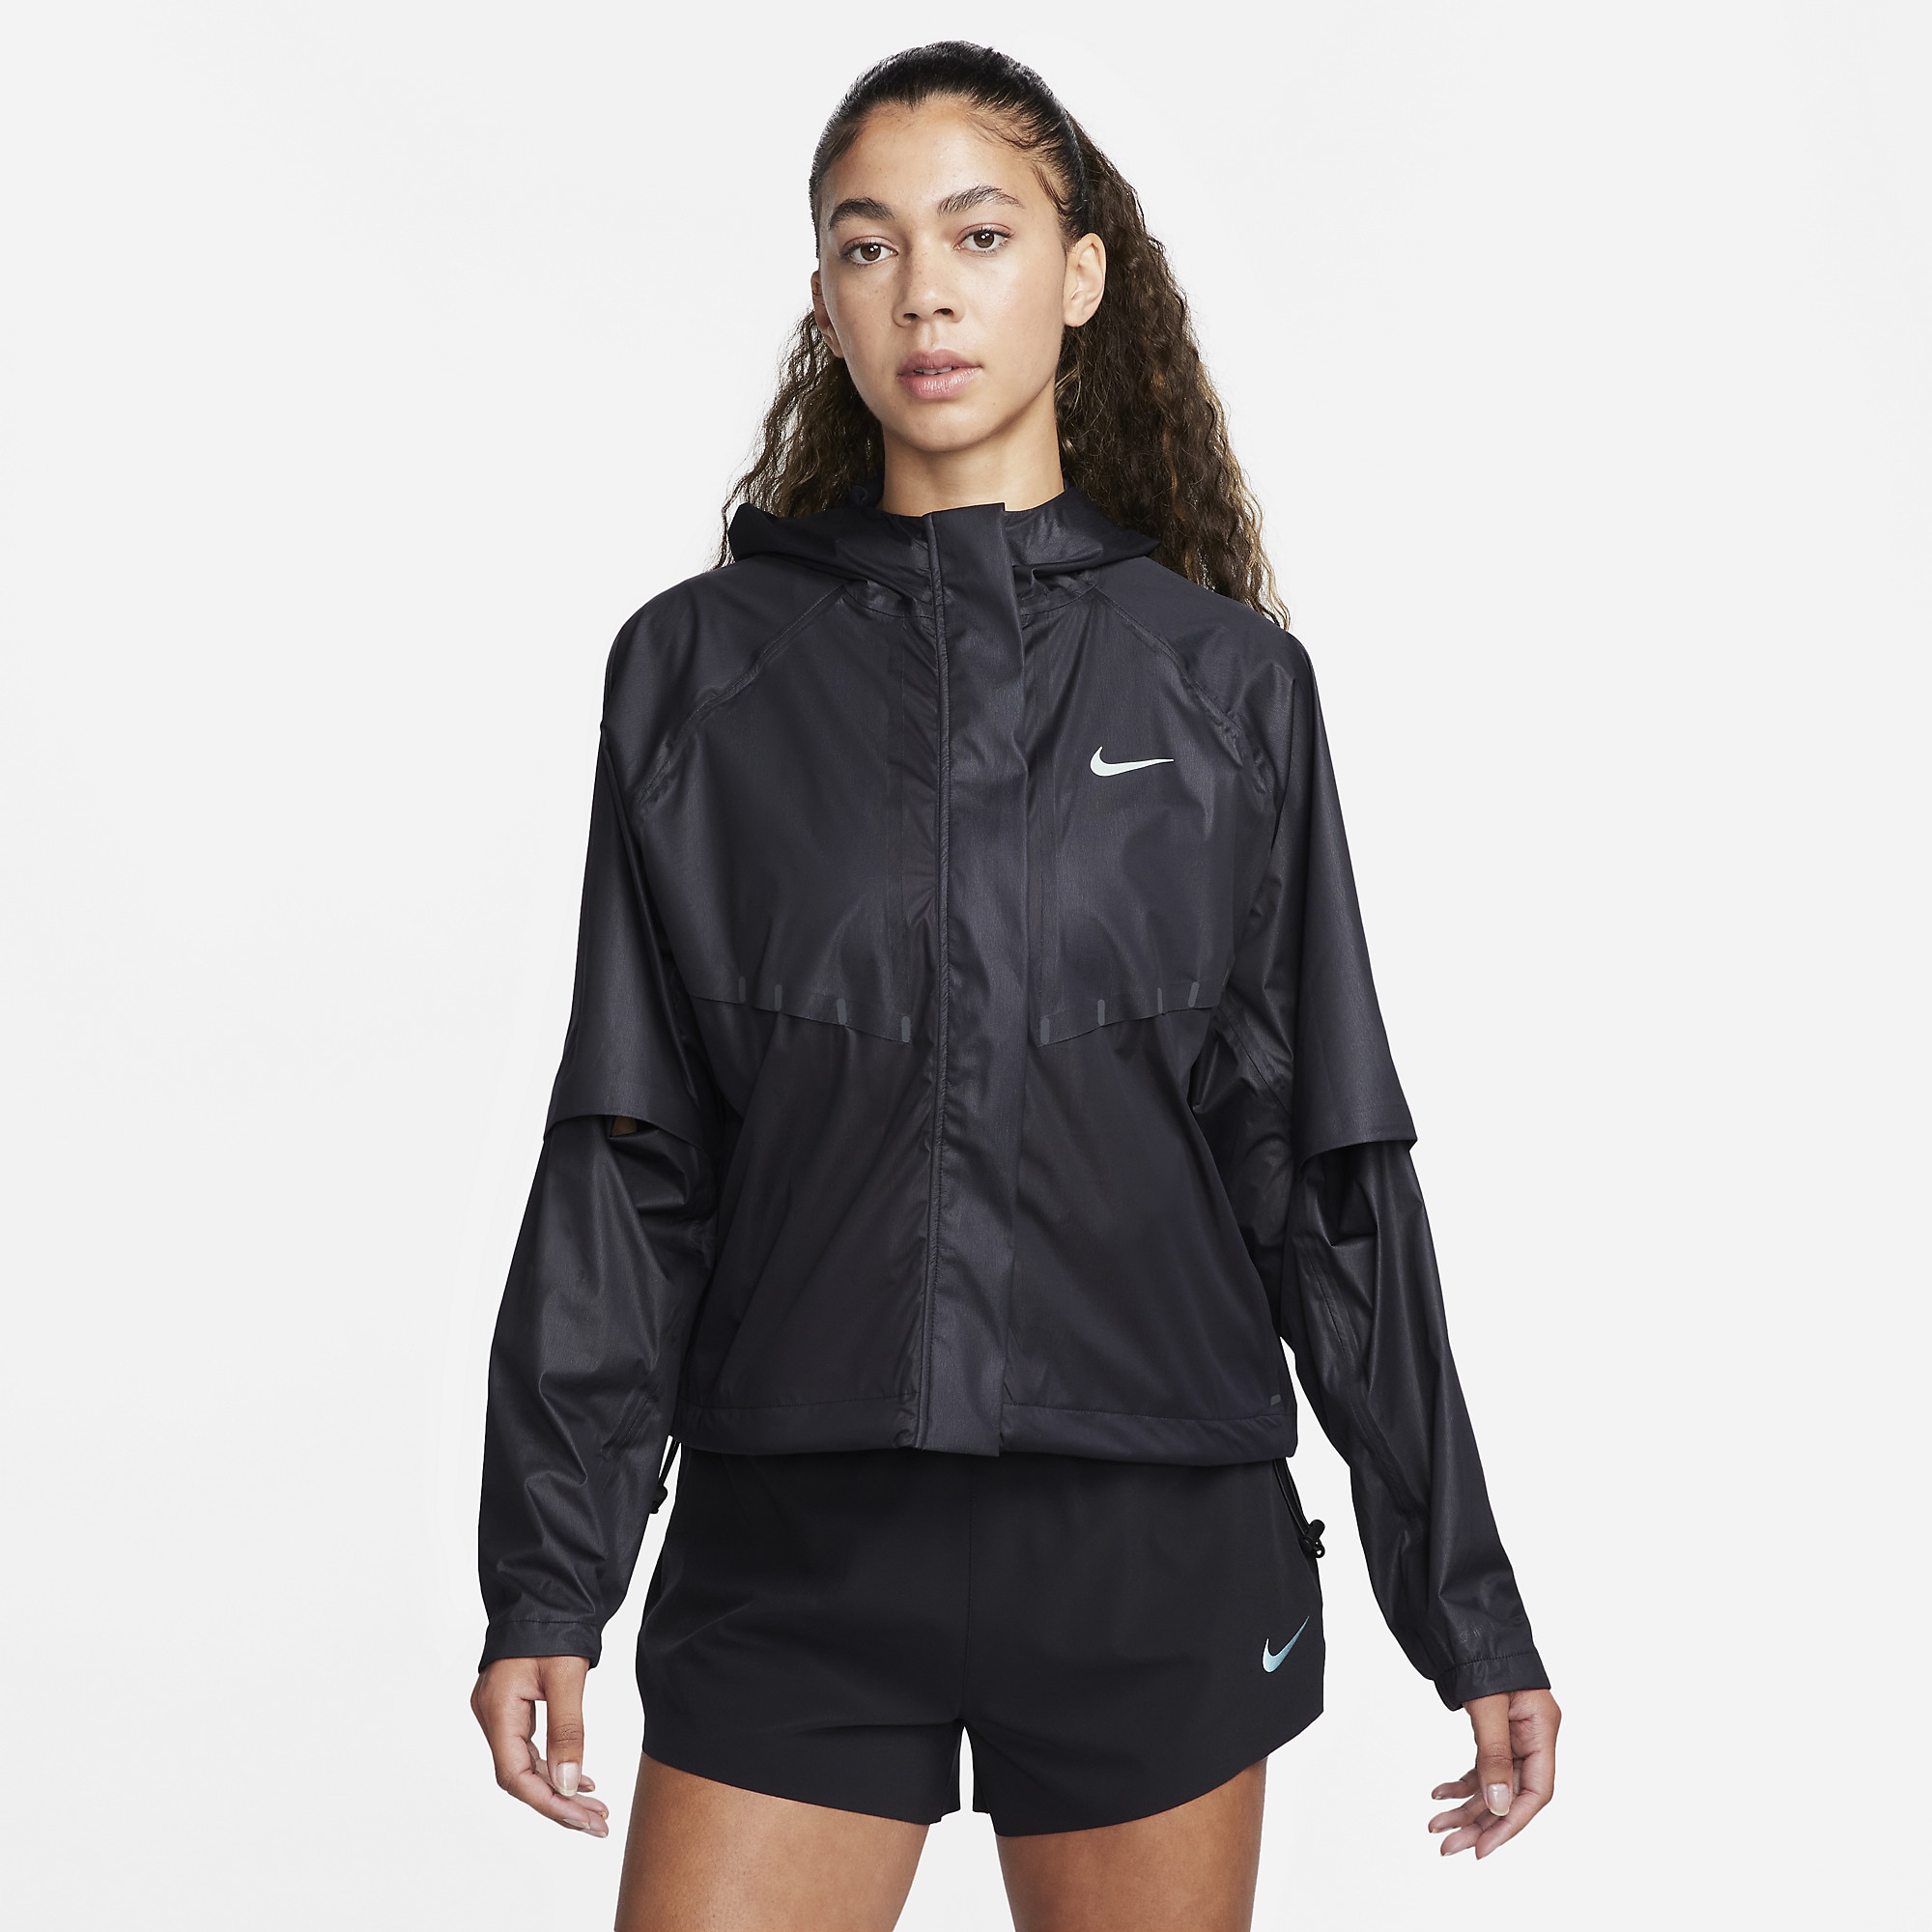 Nike Womens Storm-FIT Running Division Aerogami Jacket | Pro:Direct Running